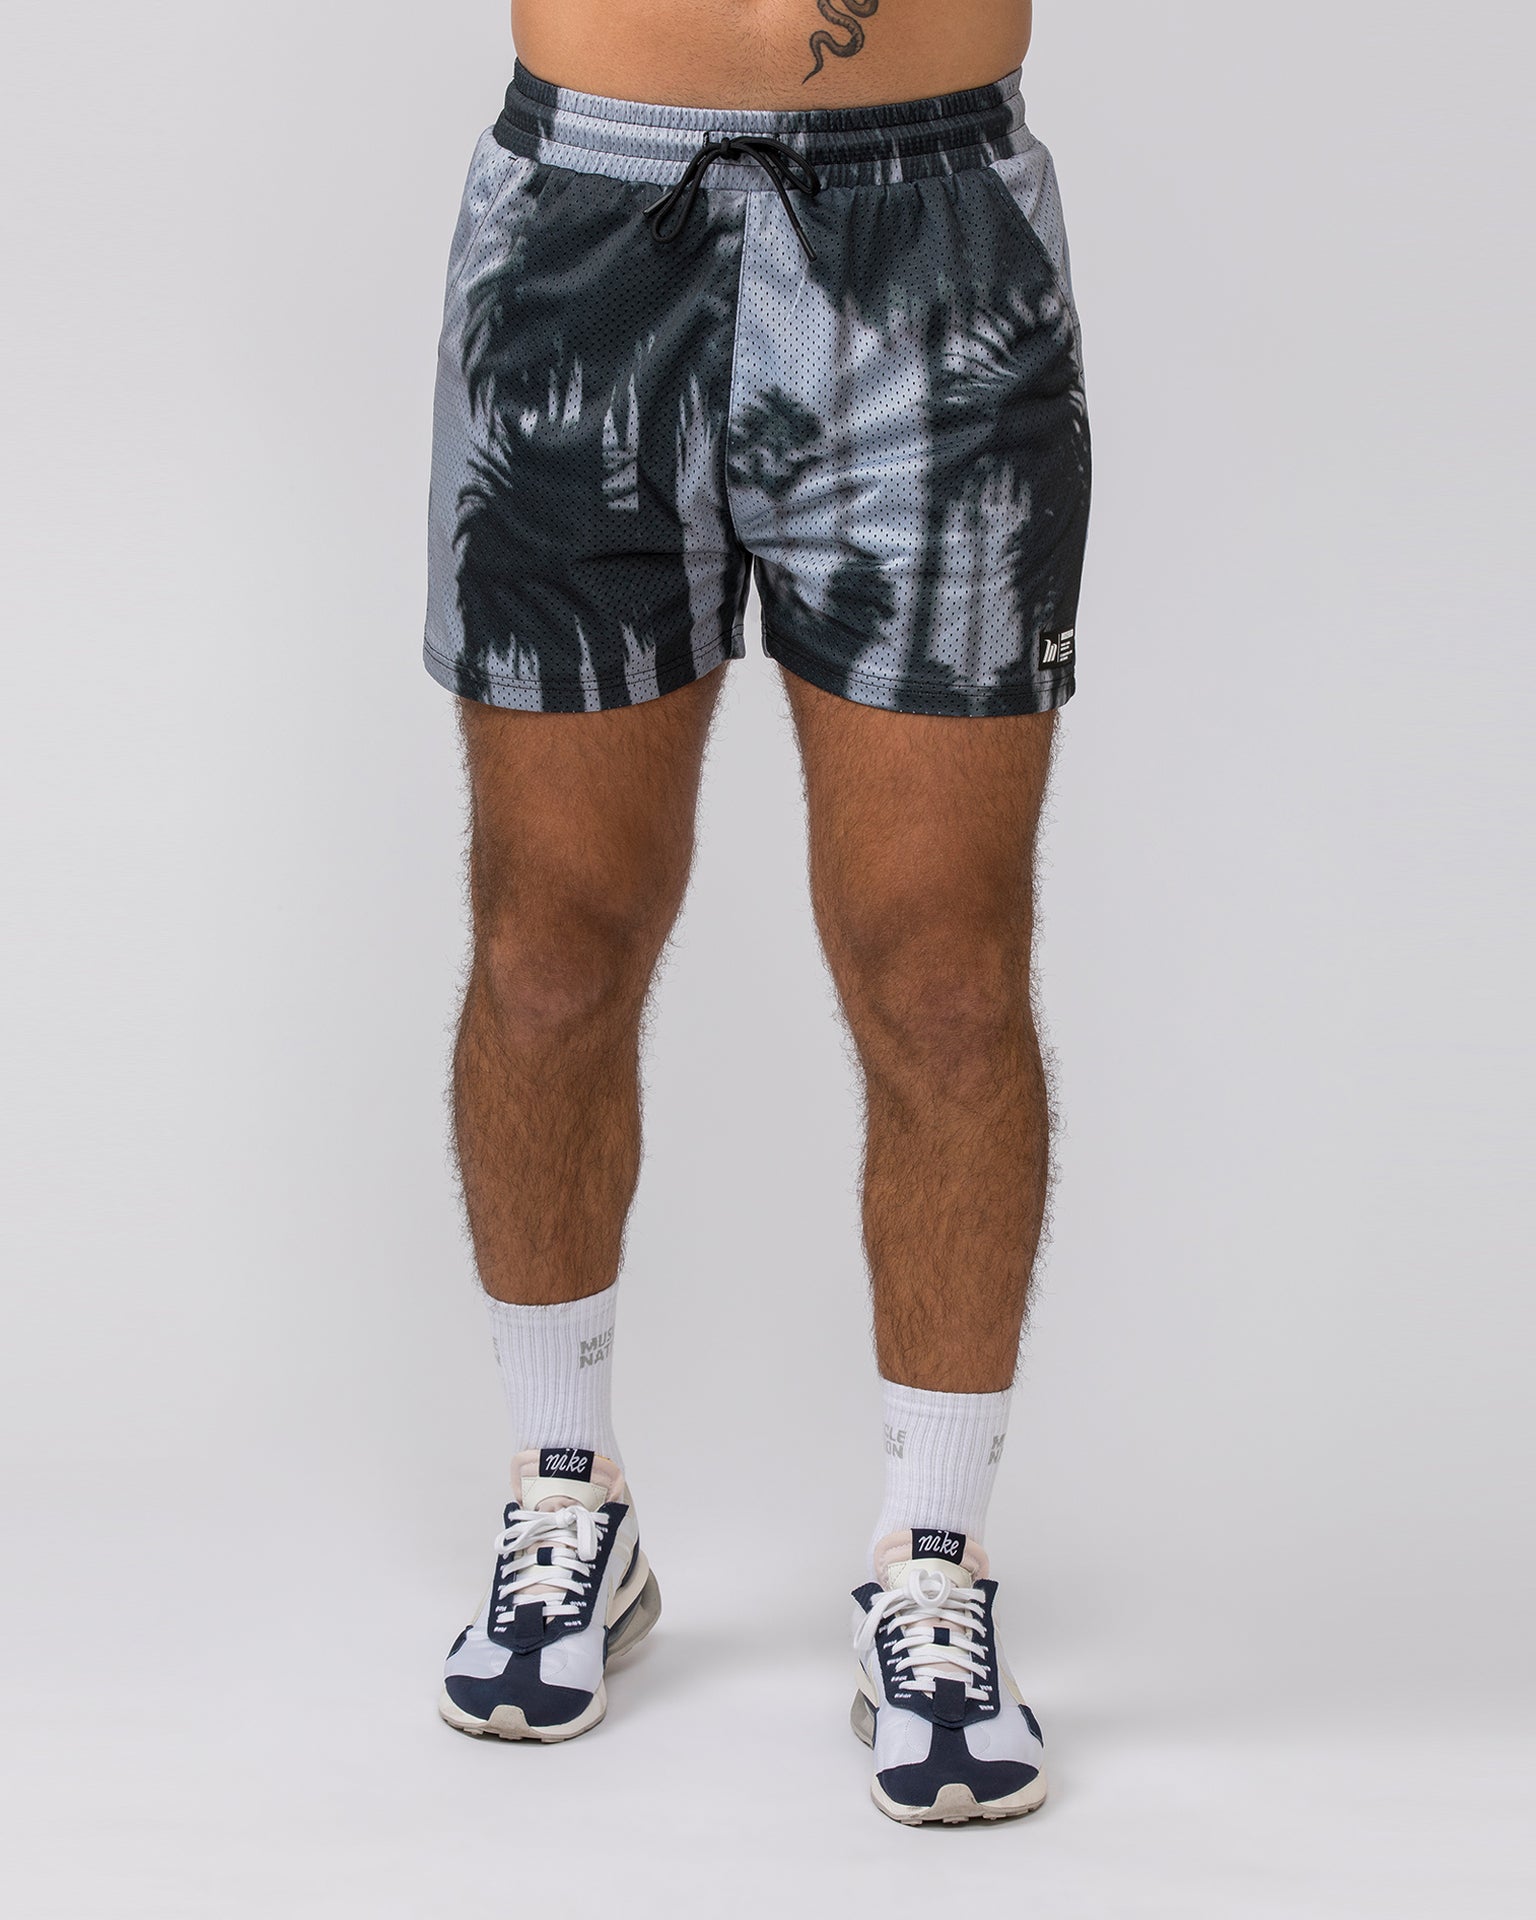 Muscle Nation Gym Shorts Lay Up 3.5'' Shorts - Palm Tree Print